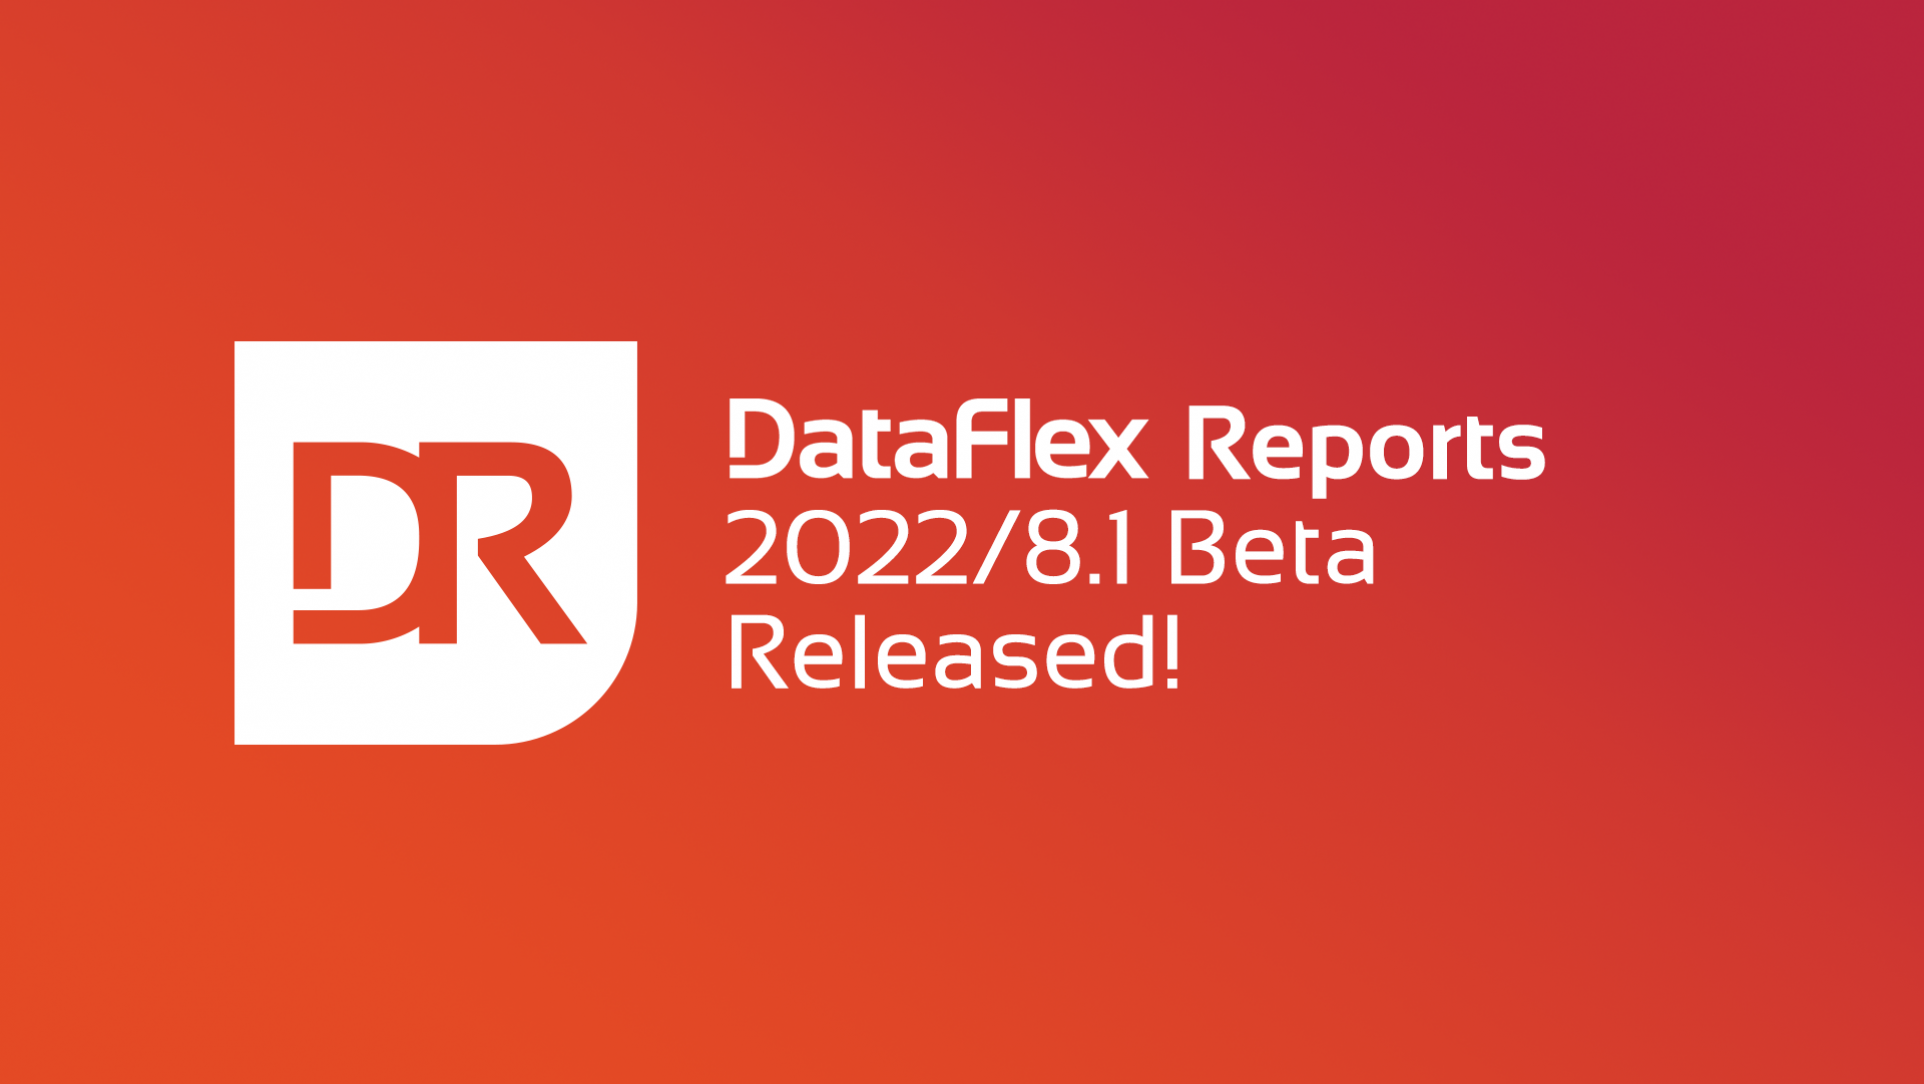 DataFlex Reports 2022/8.1 Beta